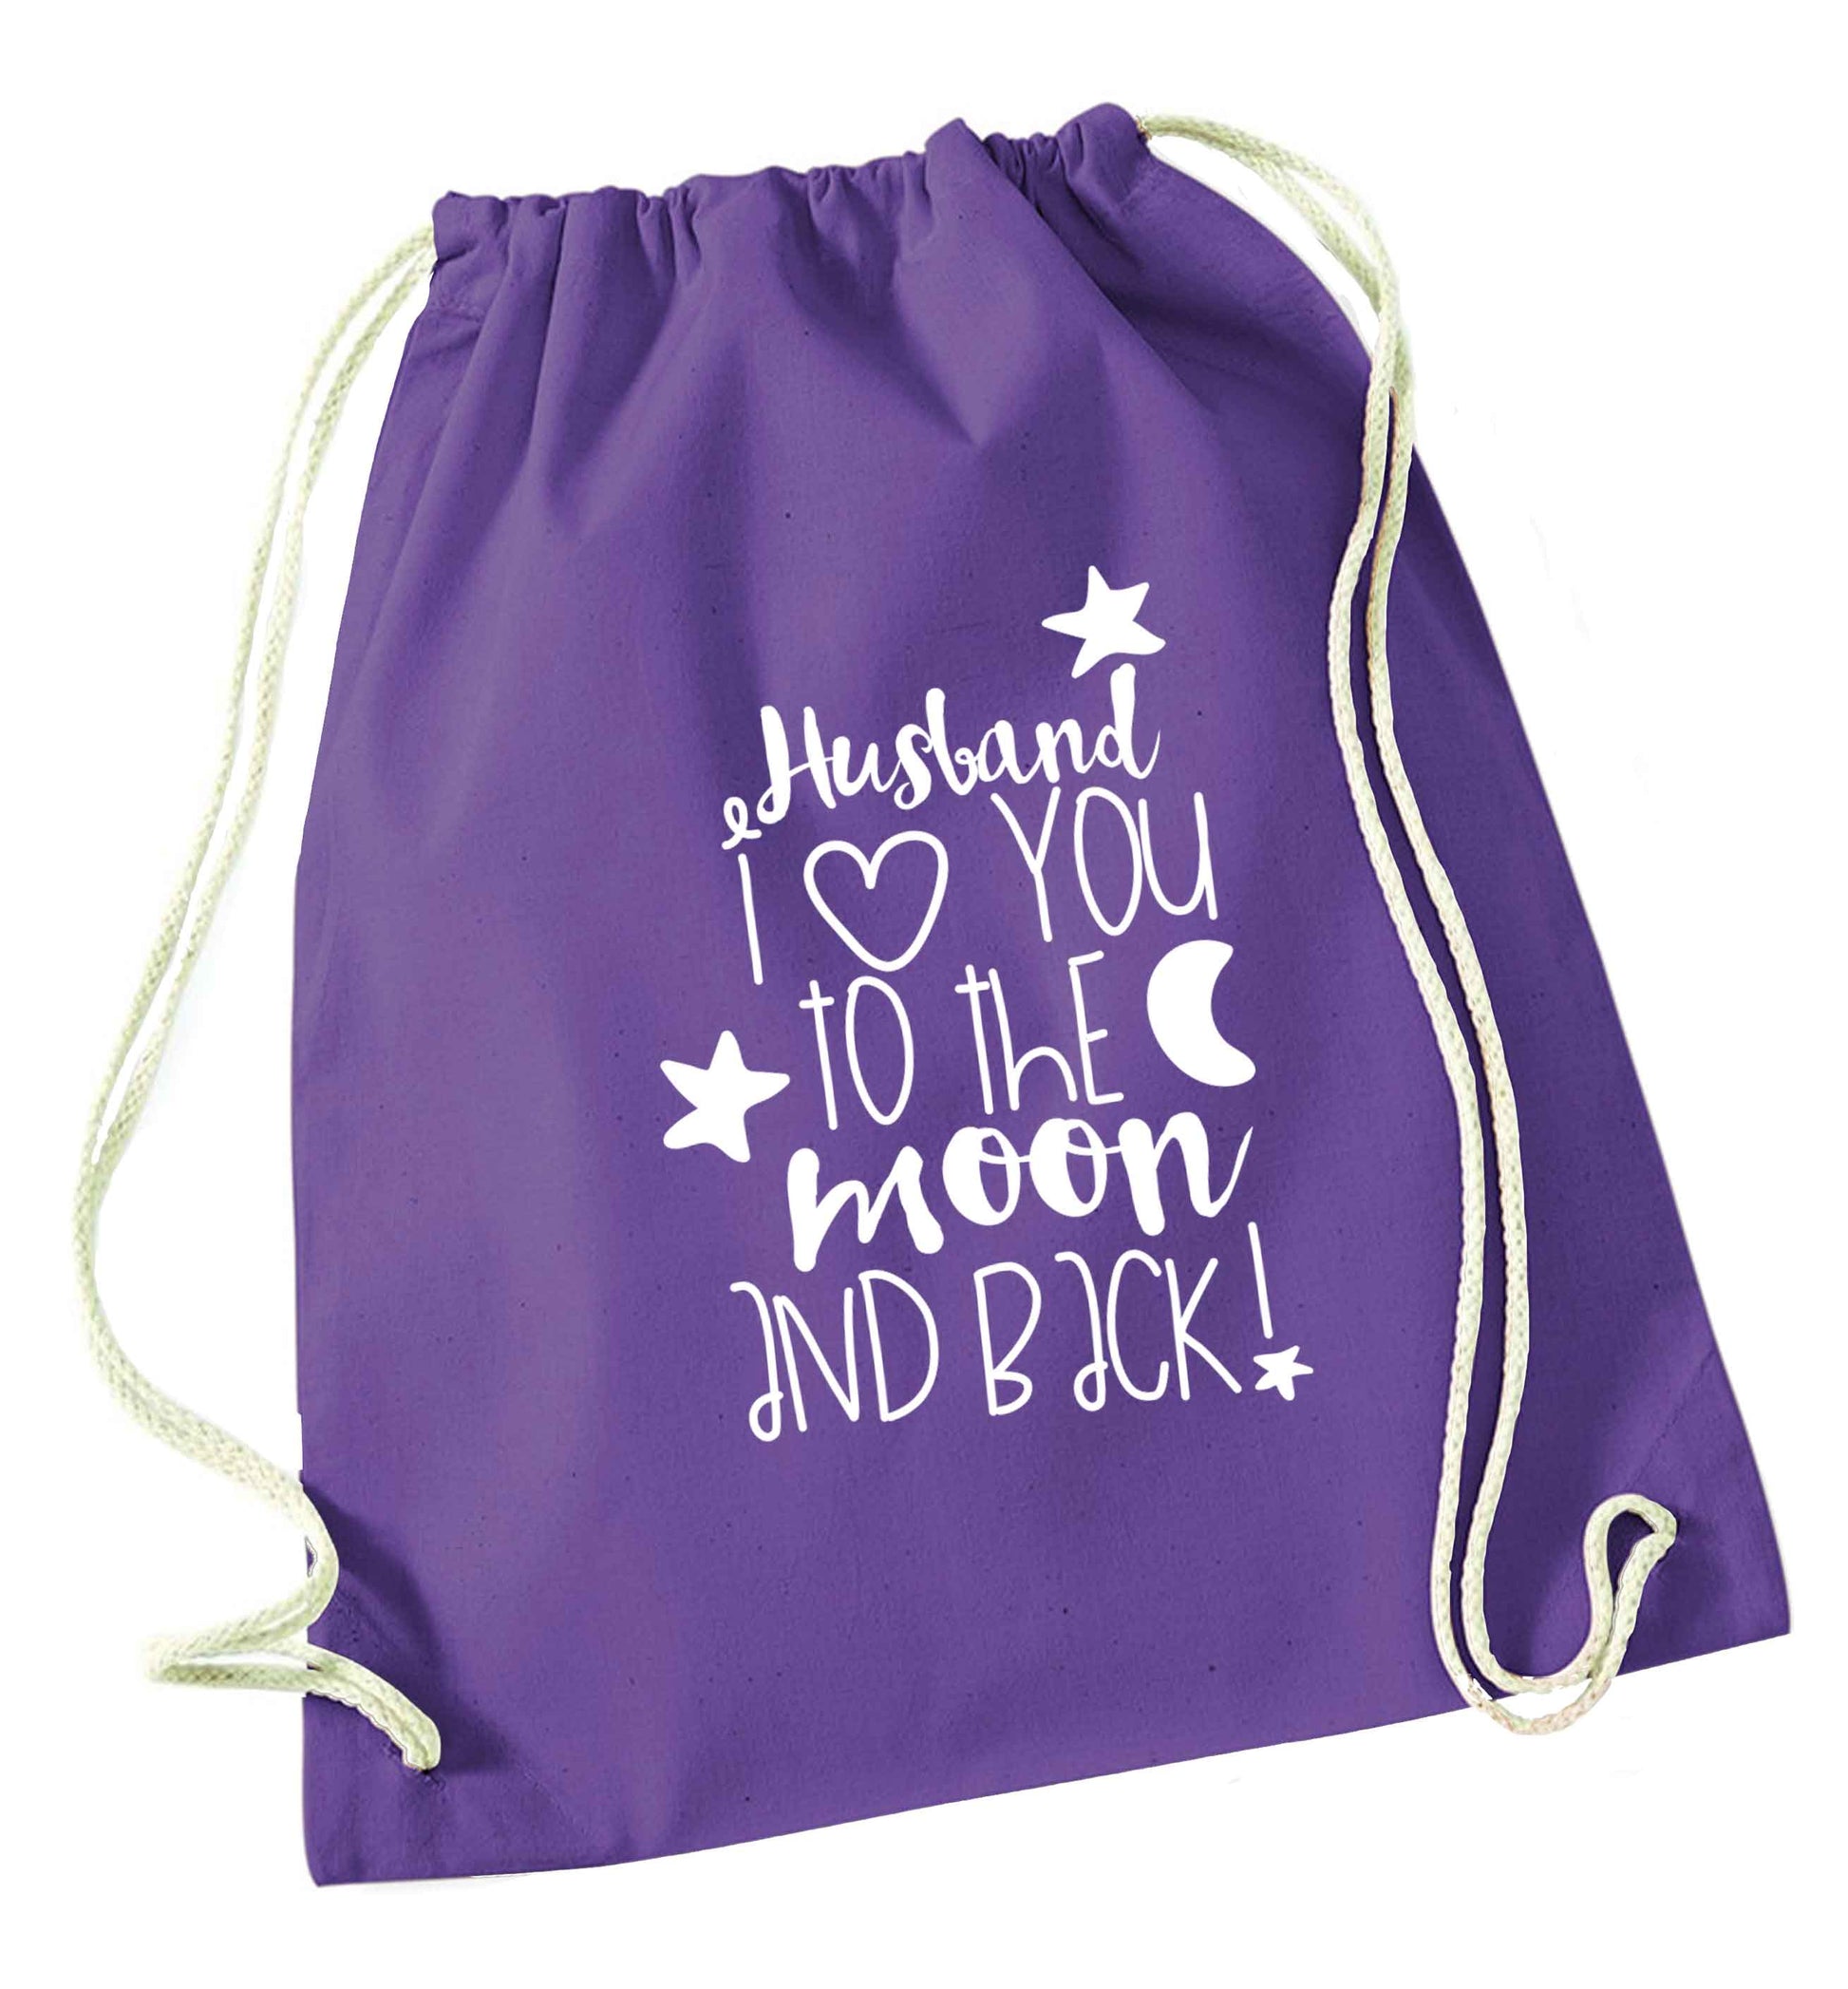 Husband I love you to the moon and back purple drawstring bag